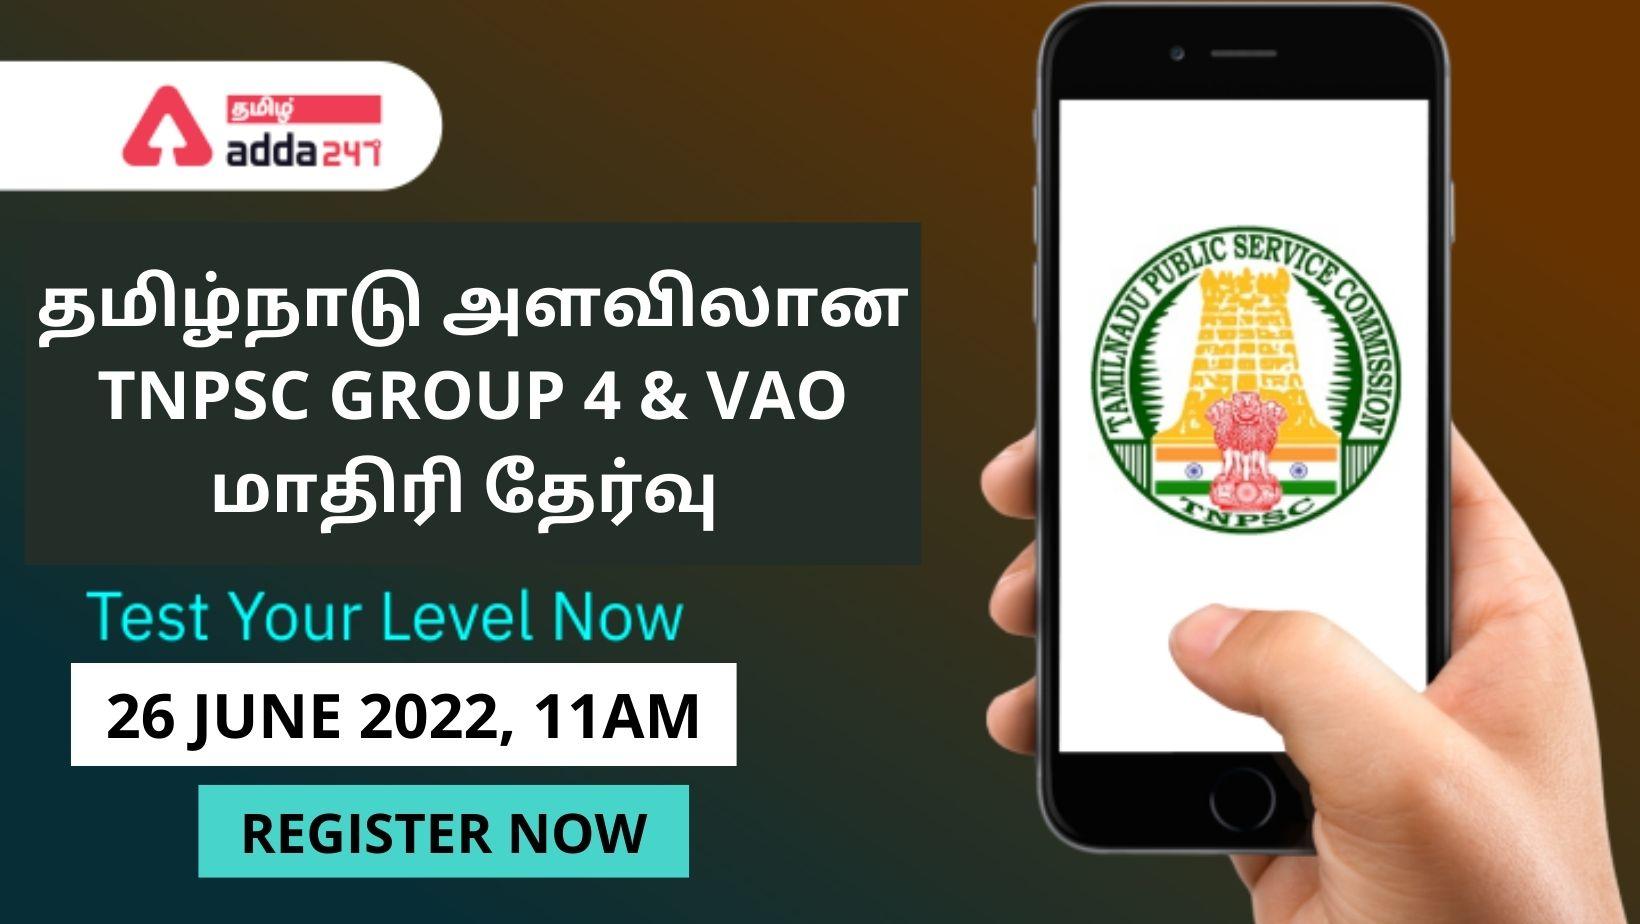 All Over Tamil Nadu Free Mock Test For TNPSC Group 4 and VAO 2022 – Register Now | தமிழ்நாடு முழுவதும் TNPSC குரூப் 4 மற்றும் VAO 2022க்கான இலவச மாதிரித் தேர்வு_30.1